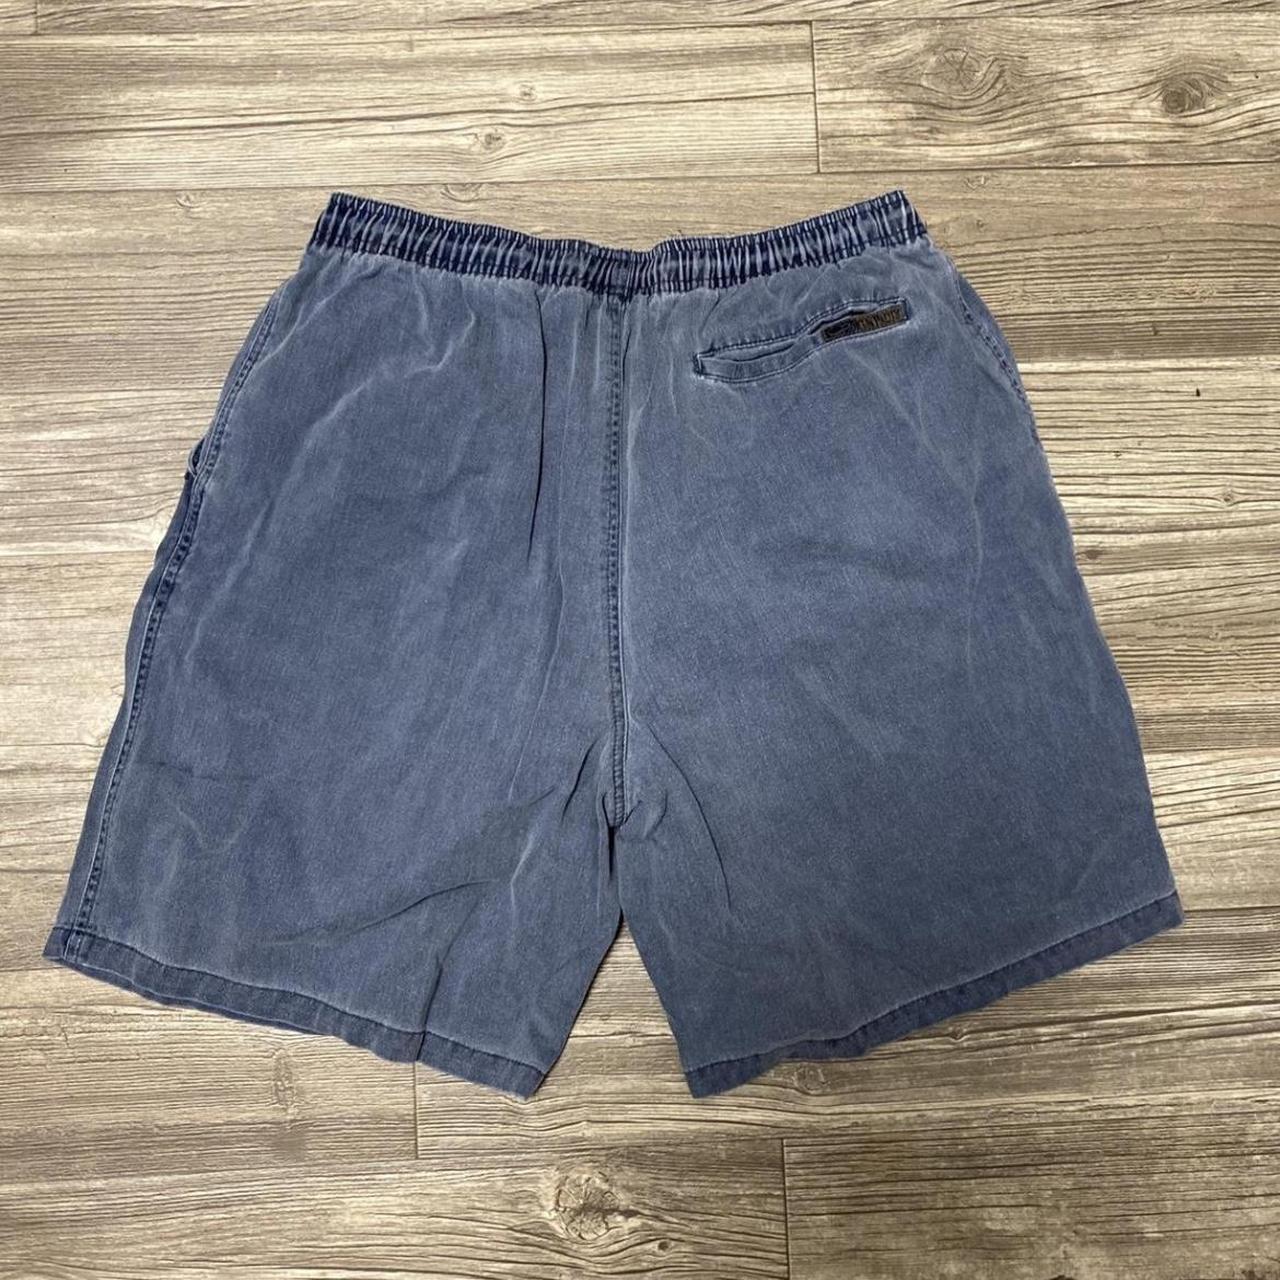 Ocean Pacific Men's Blue Shorts (6)